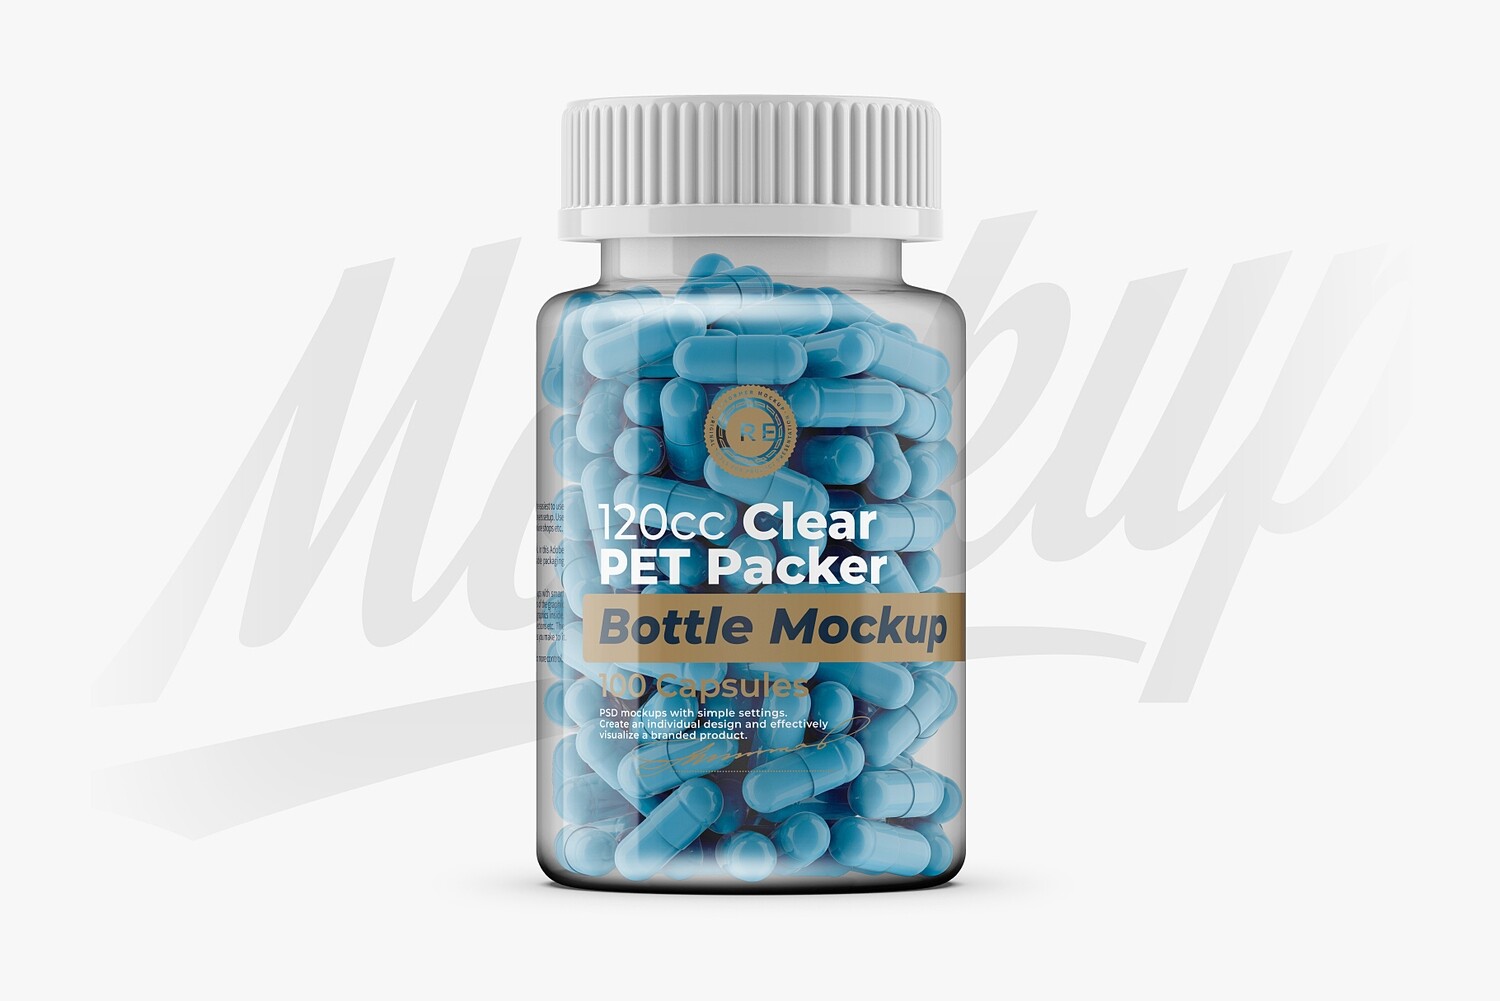 Clear Pills Bottle Mockup 120cc